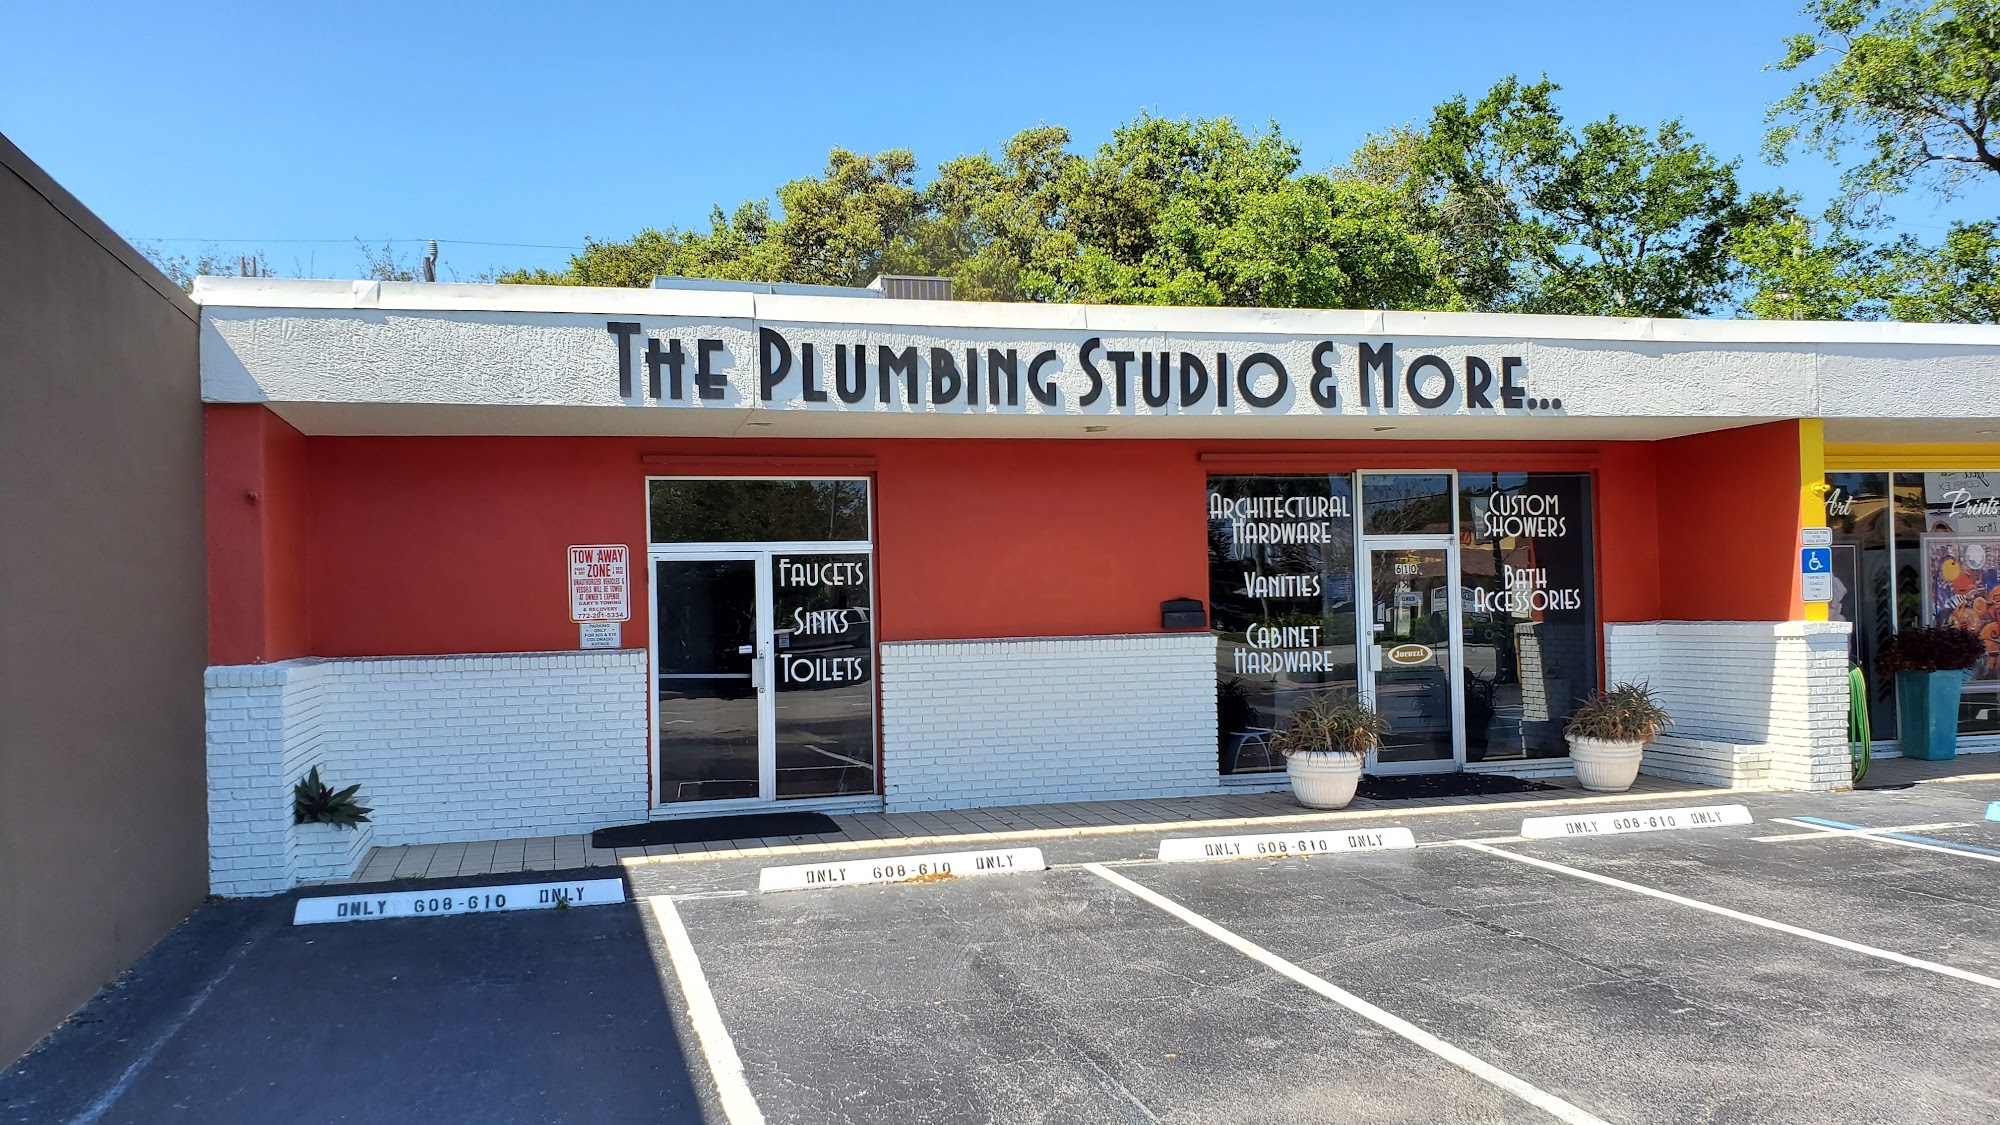 The Plumbing Studio & More